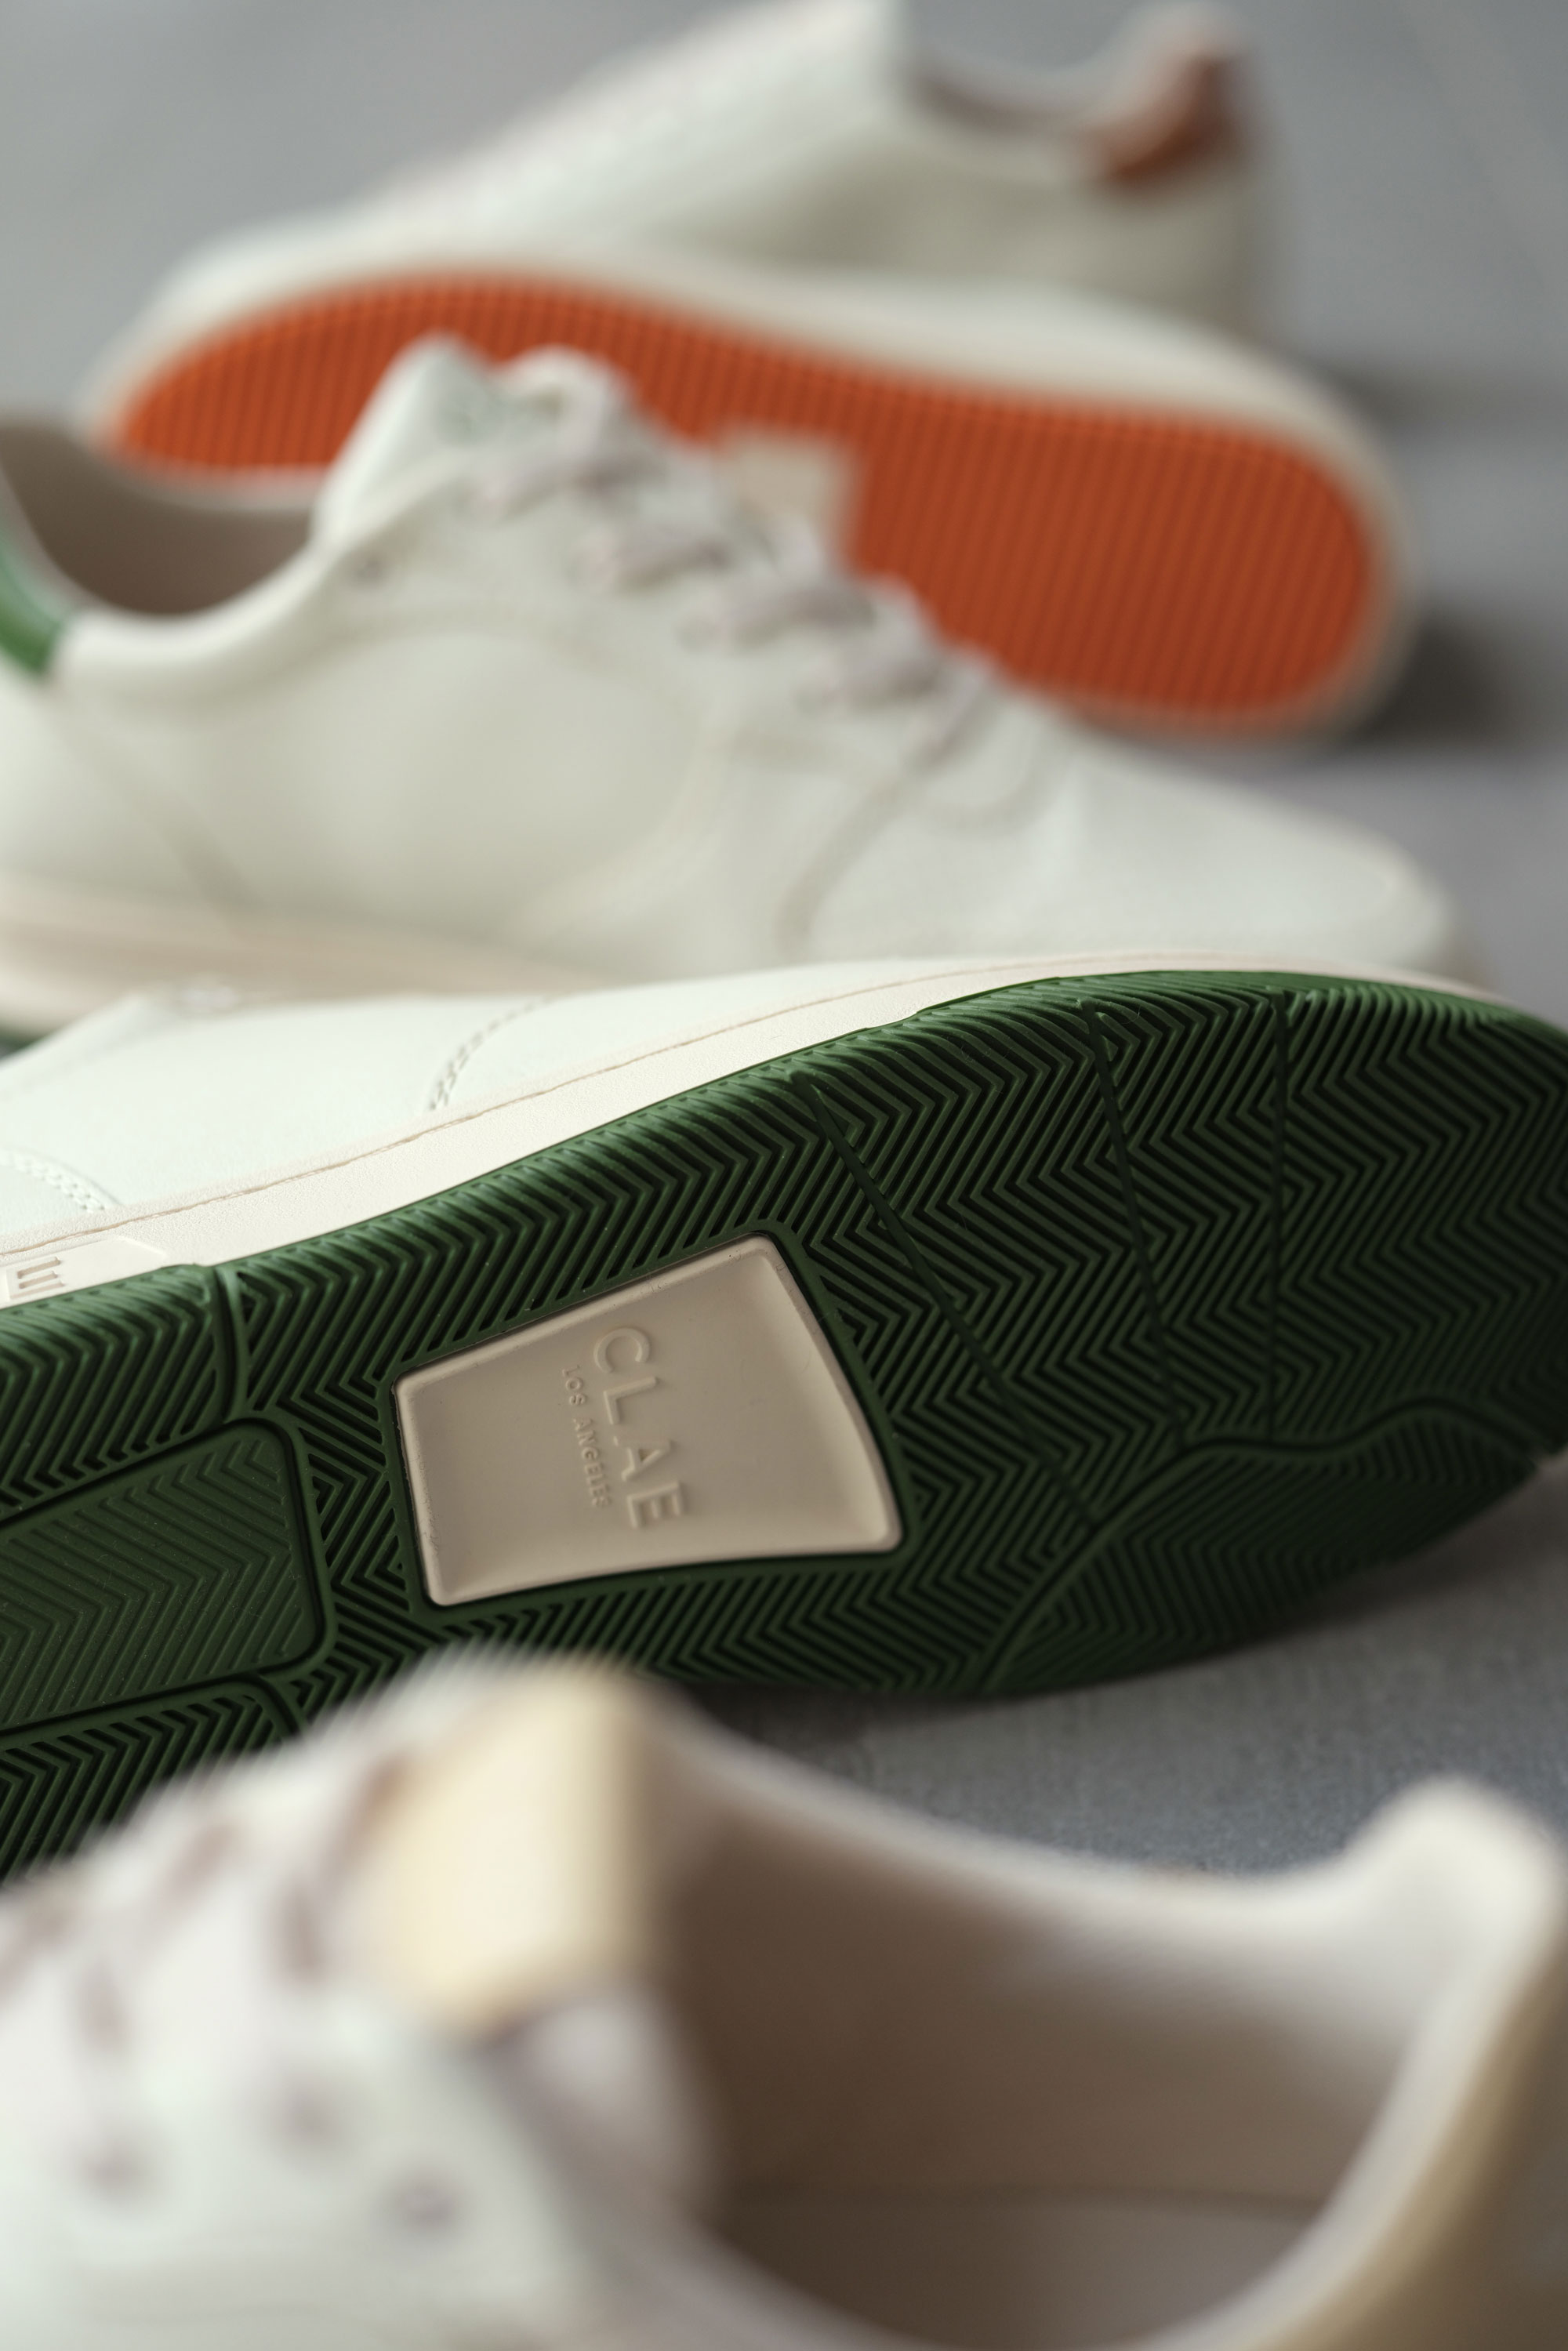 Introducing the CLAE Appleskin™ Sneaker Capsule - Gessato